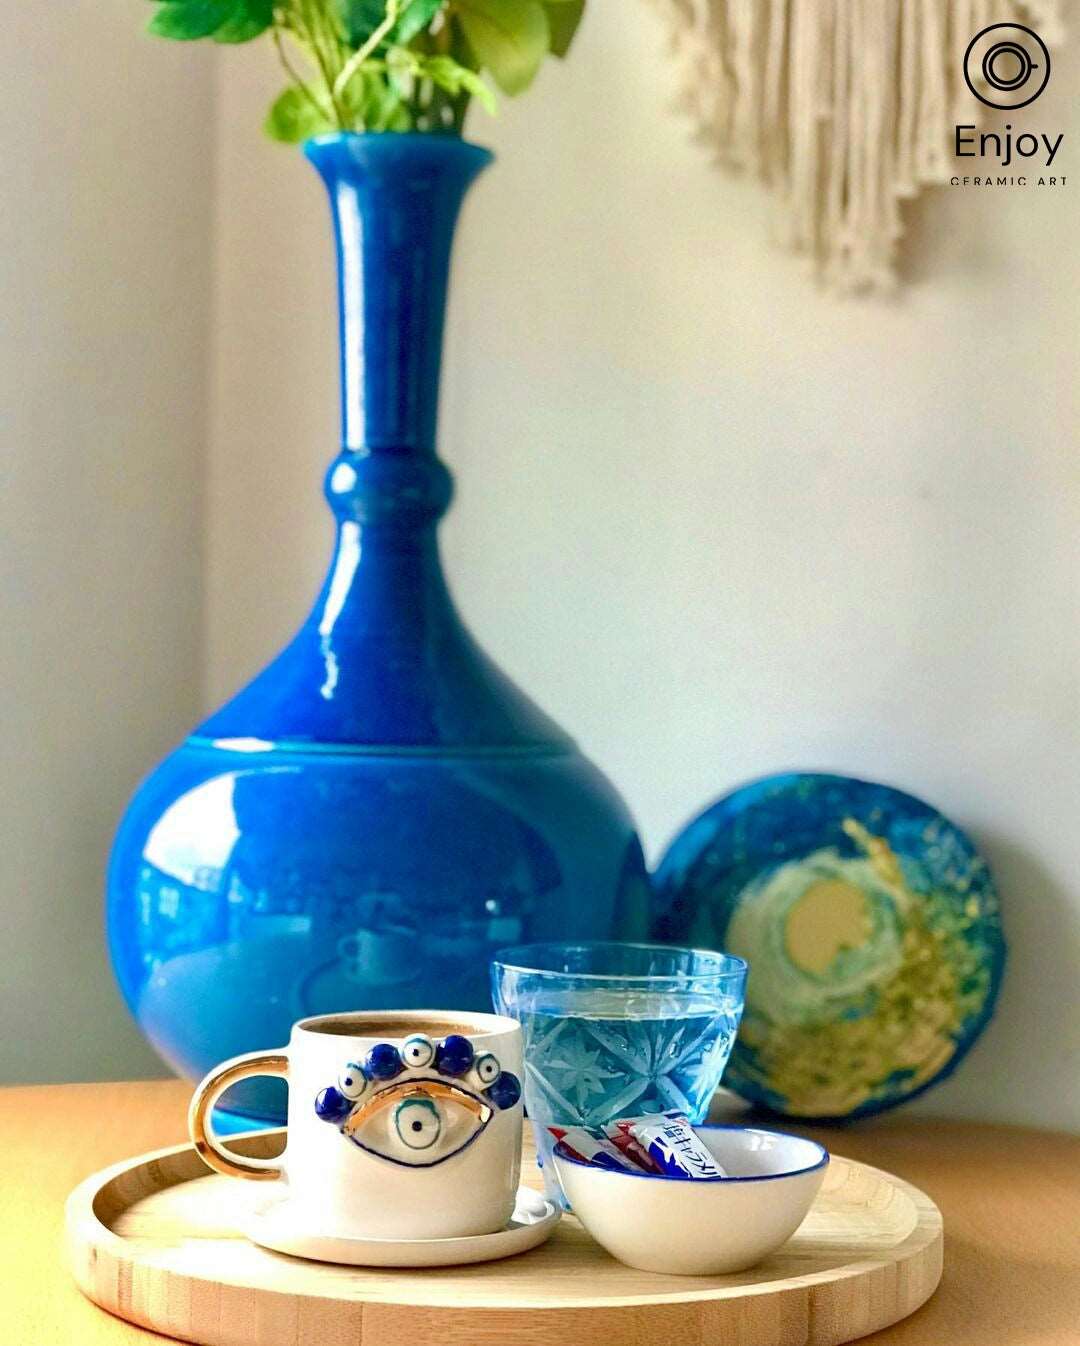 Evil Eye Protection: Handmade Ceramic Espresso Cup & Saucer Set, 5.4 oz - Turkish Evil Eye Espresso Cups, Starbucks Inspired Coffee Mug with Gold Handle